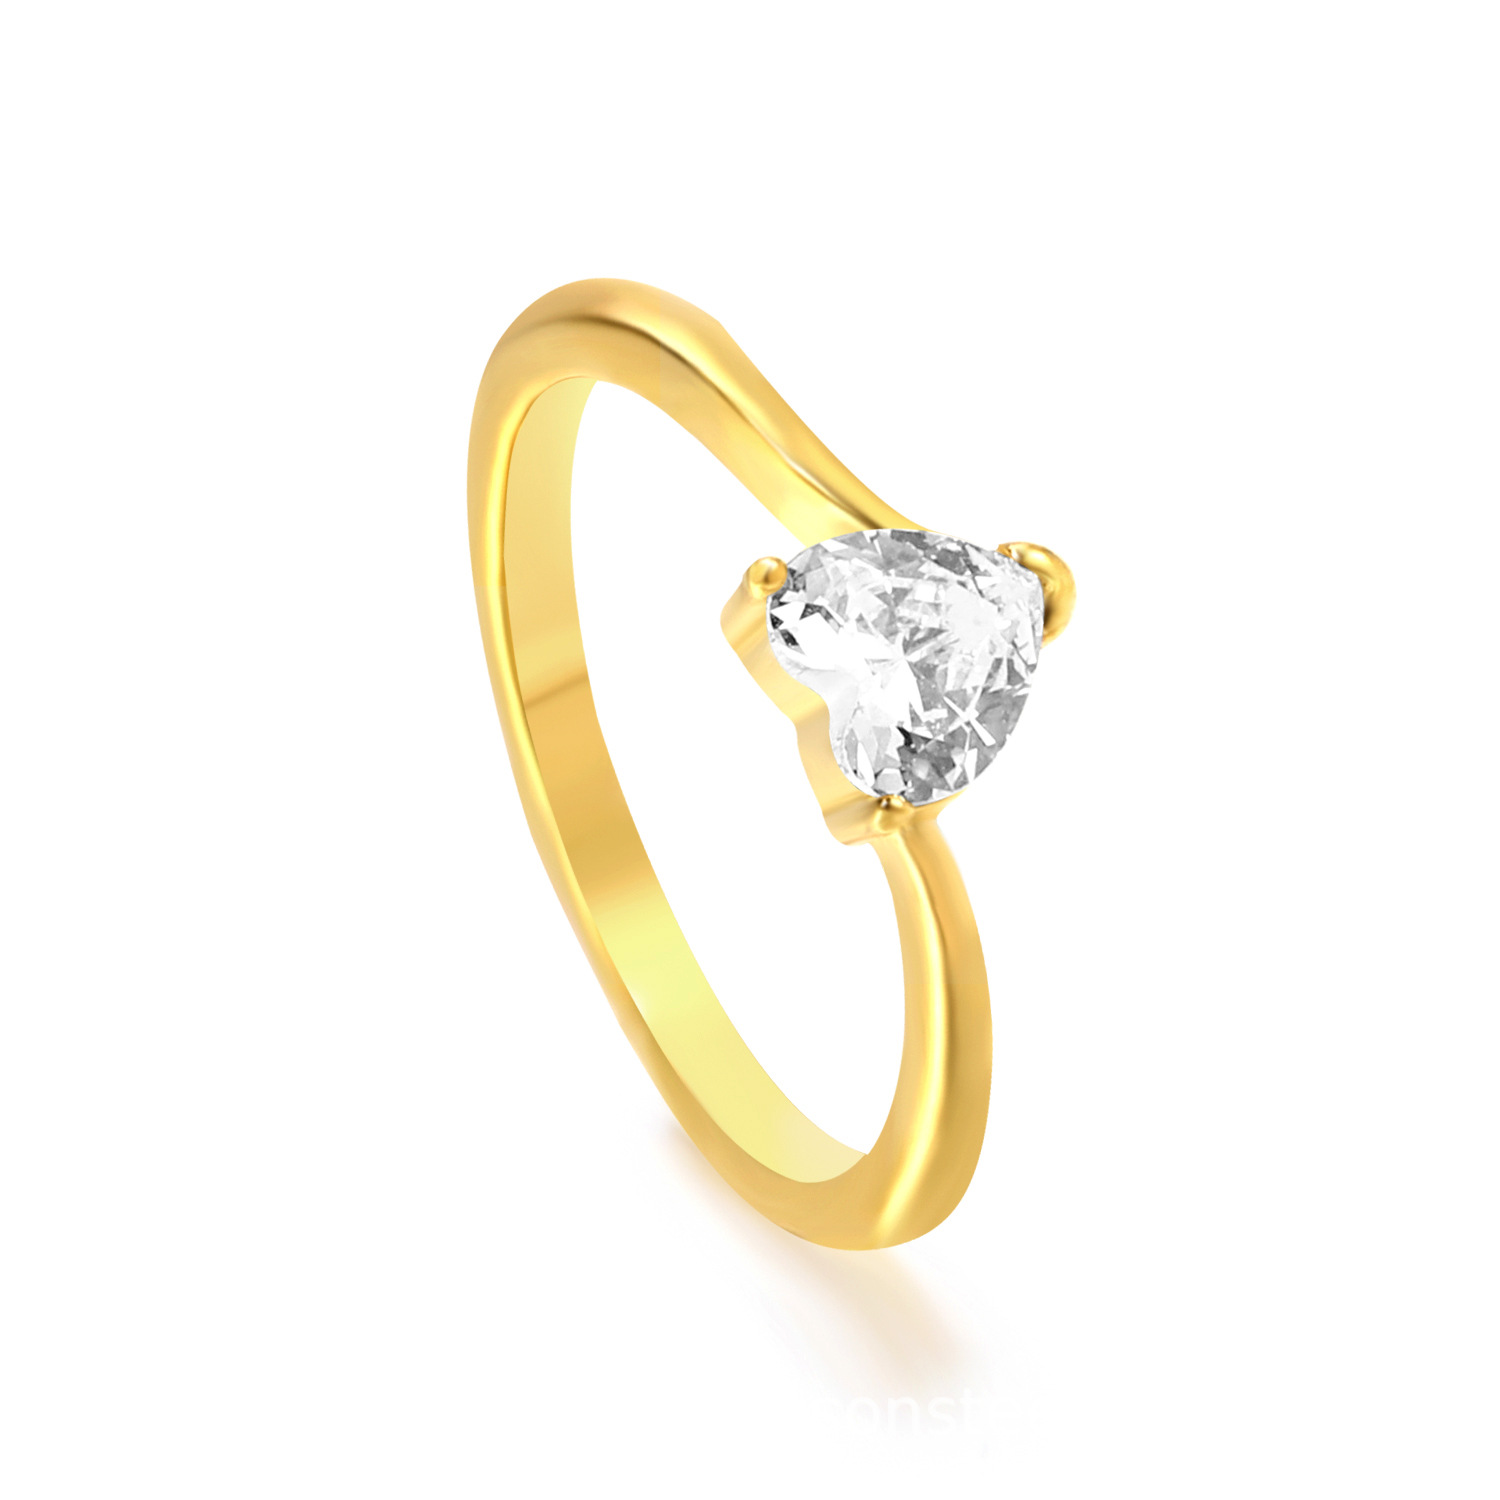 White Diamond Ring with Gold Heart RI144506-9G